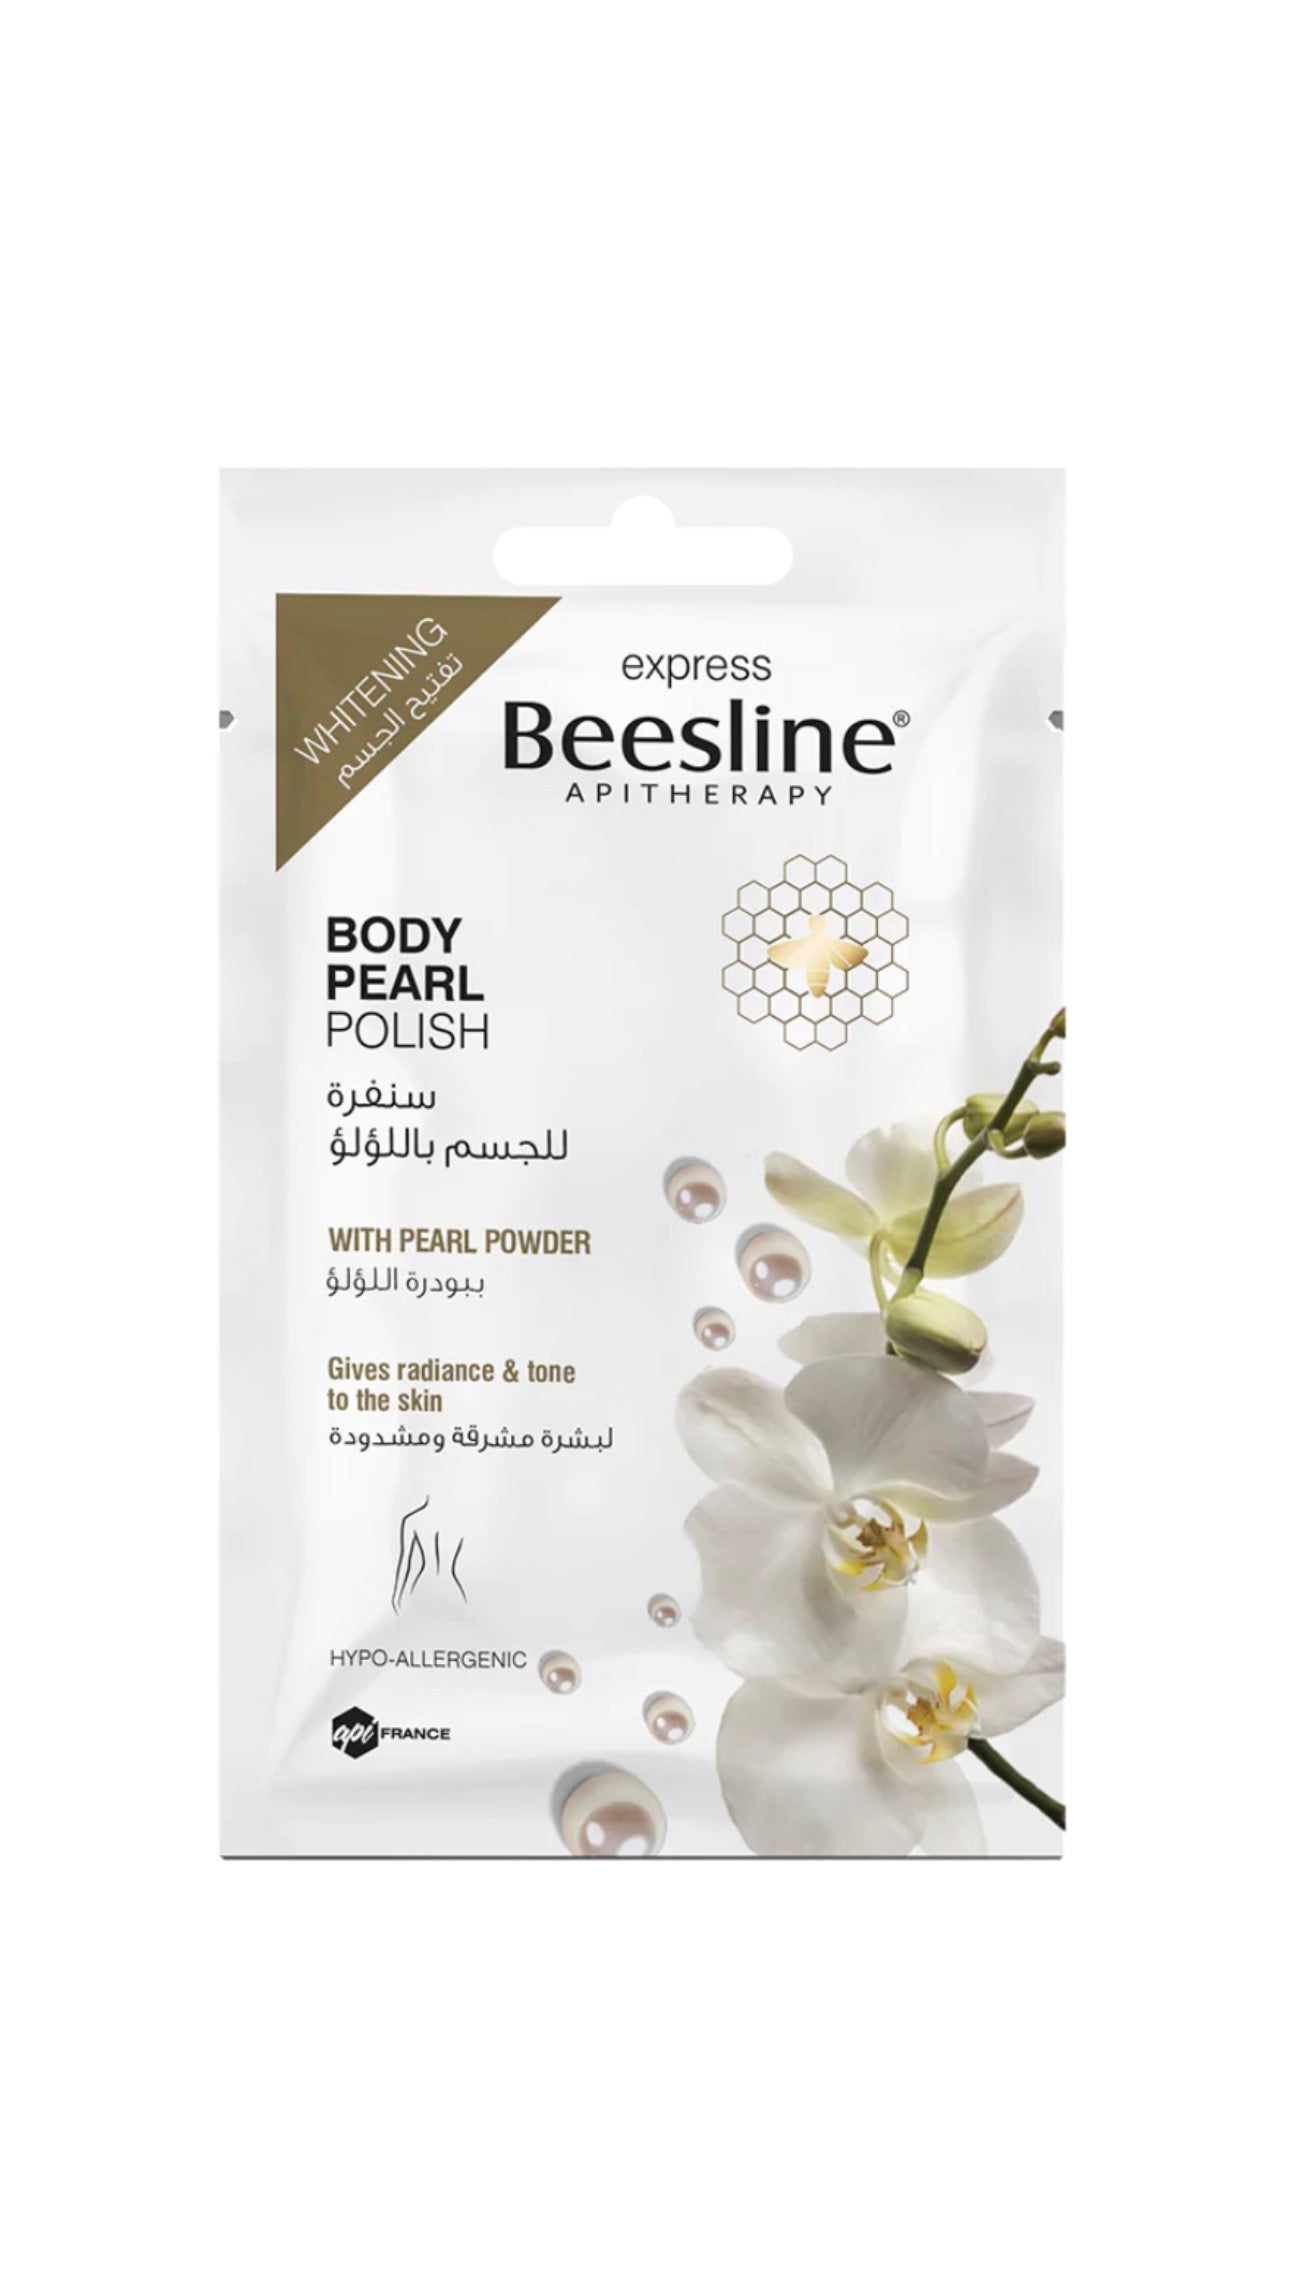 Beesline Express Body Pearl Polish